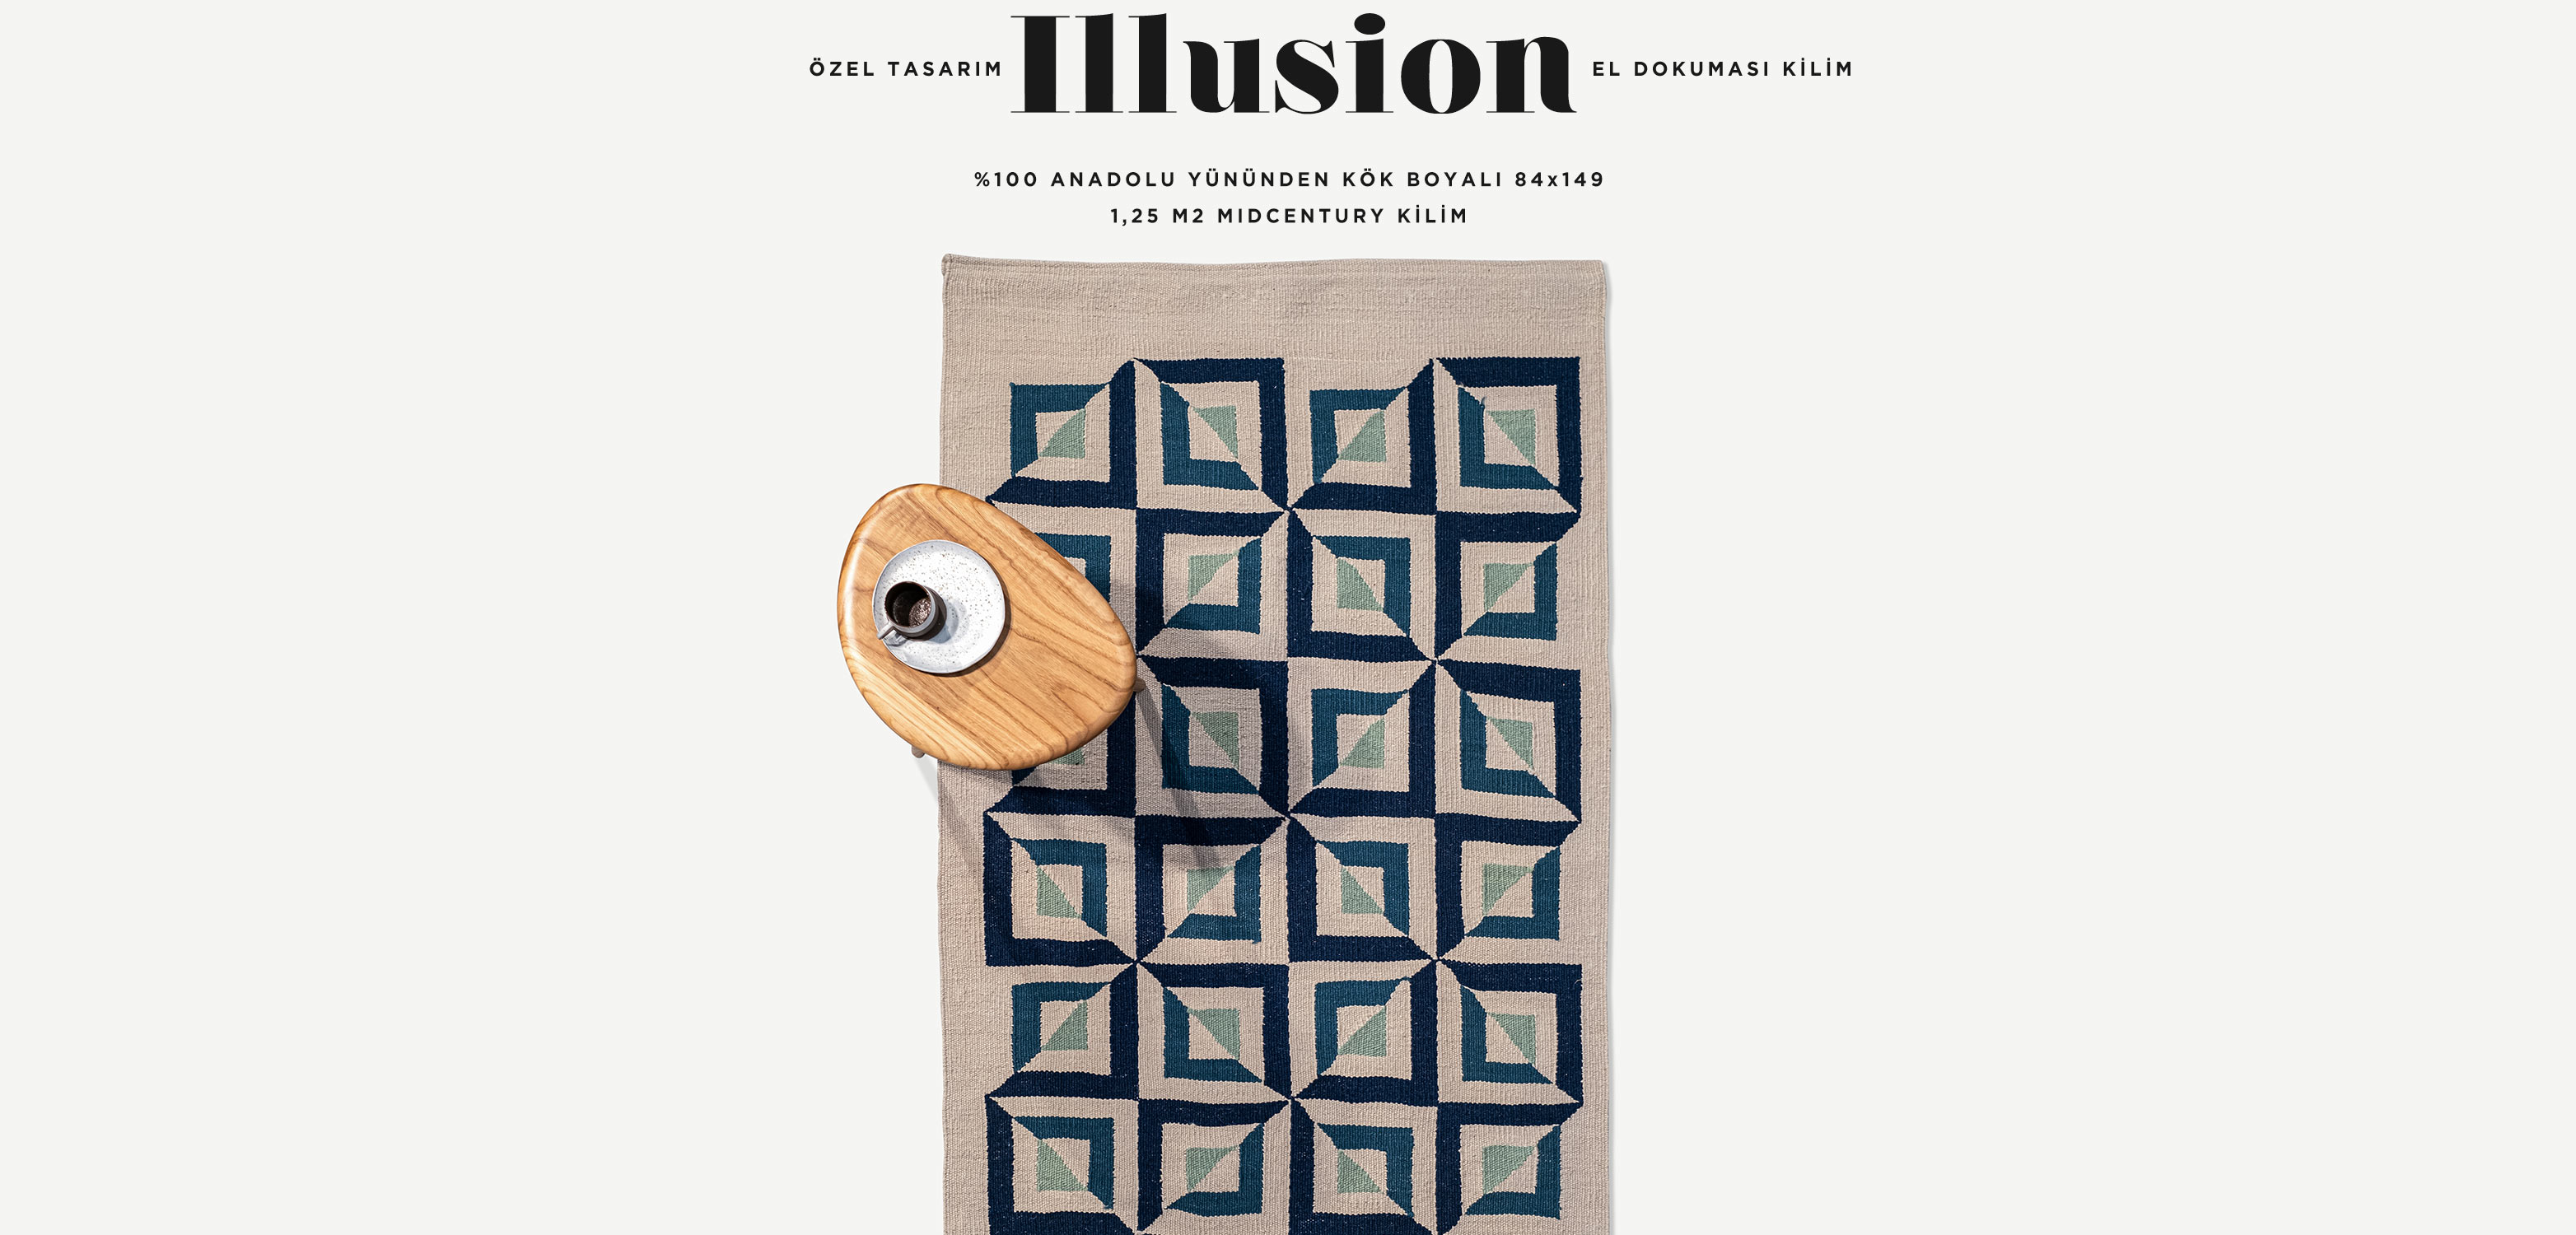 illusion el dokuması kilim 84x149, 1,25 m2'in resmi